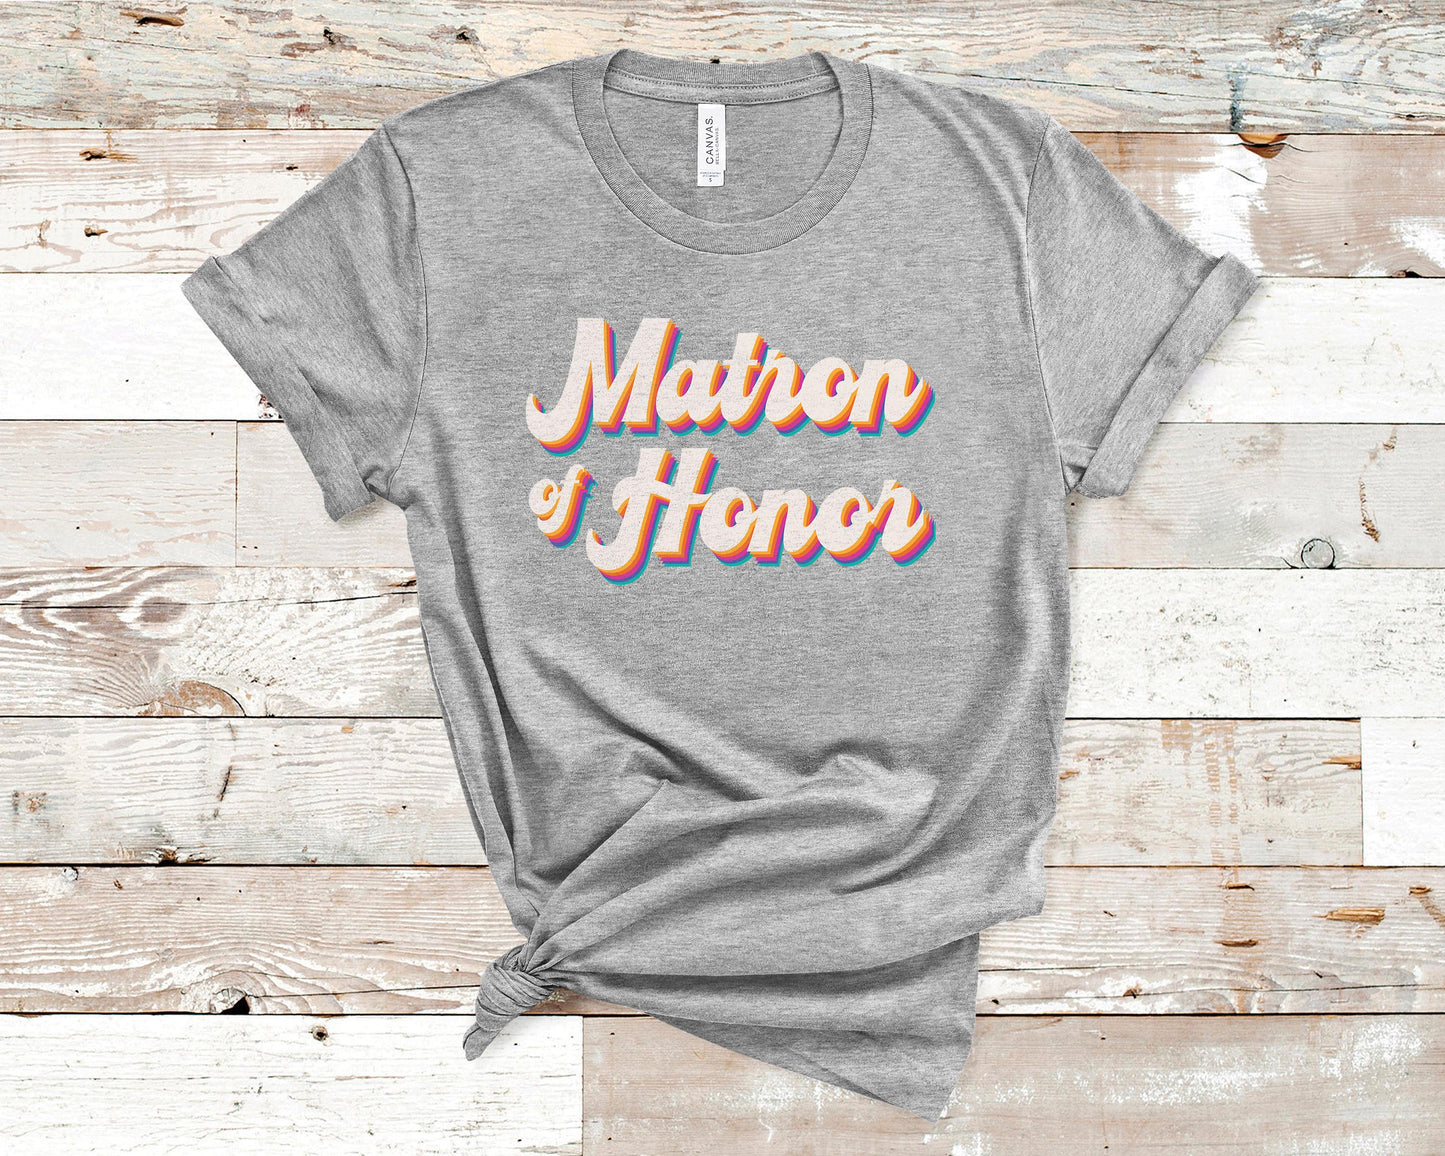 Matron of Honor - Bride/Wedding